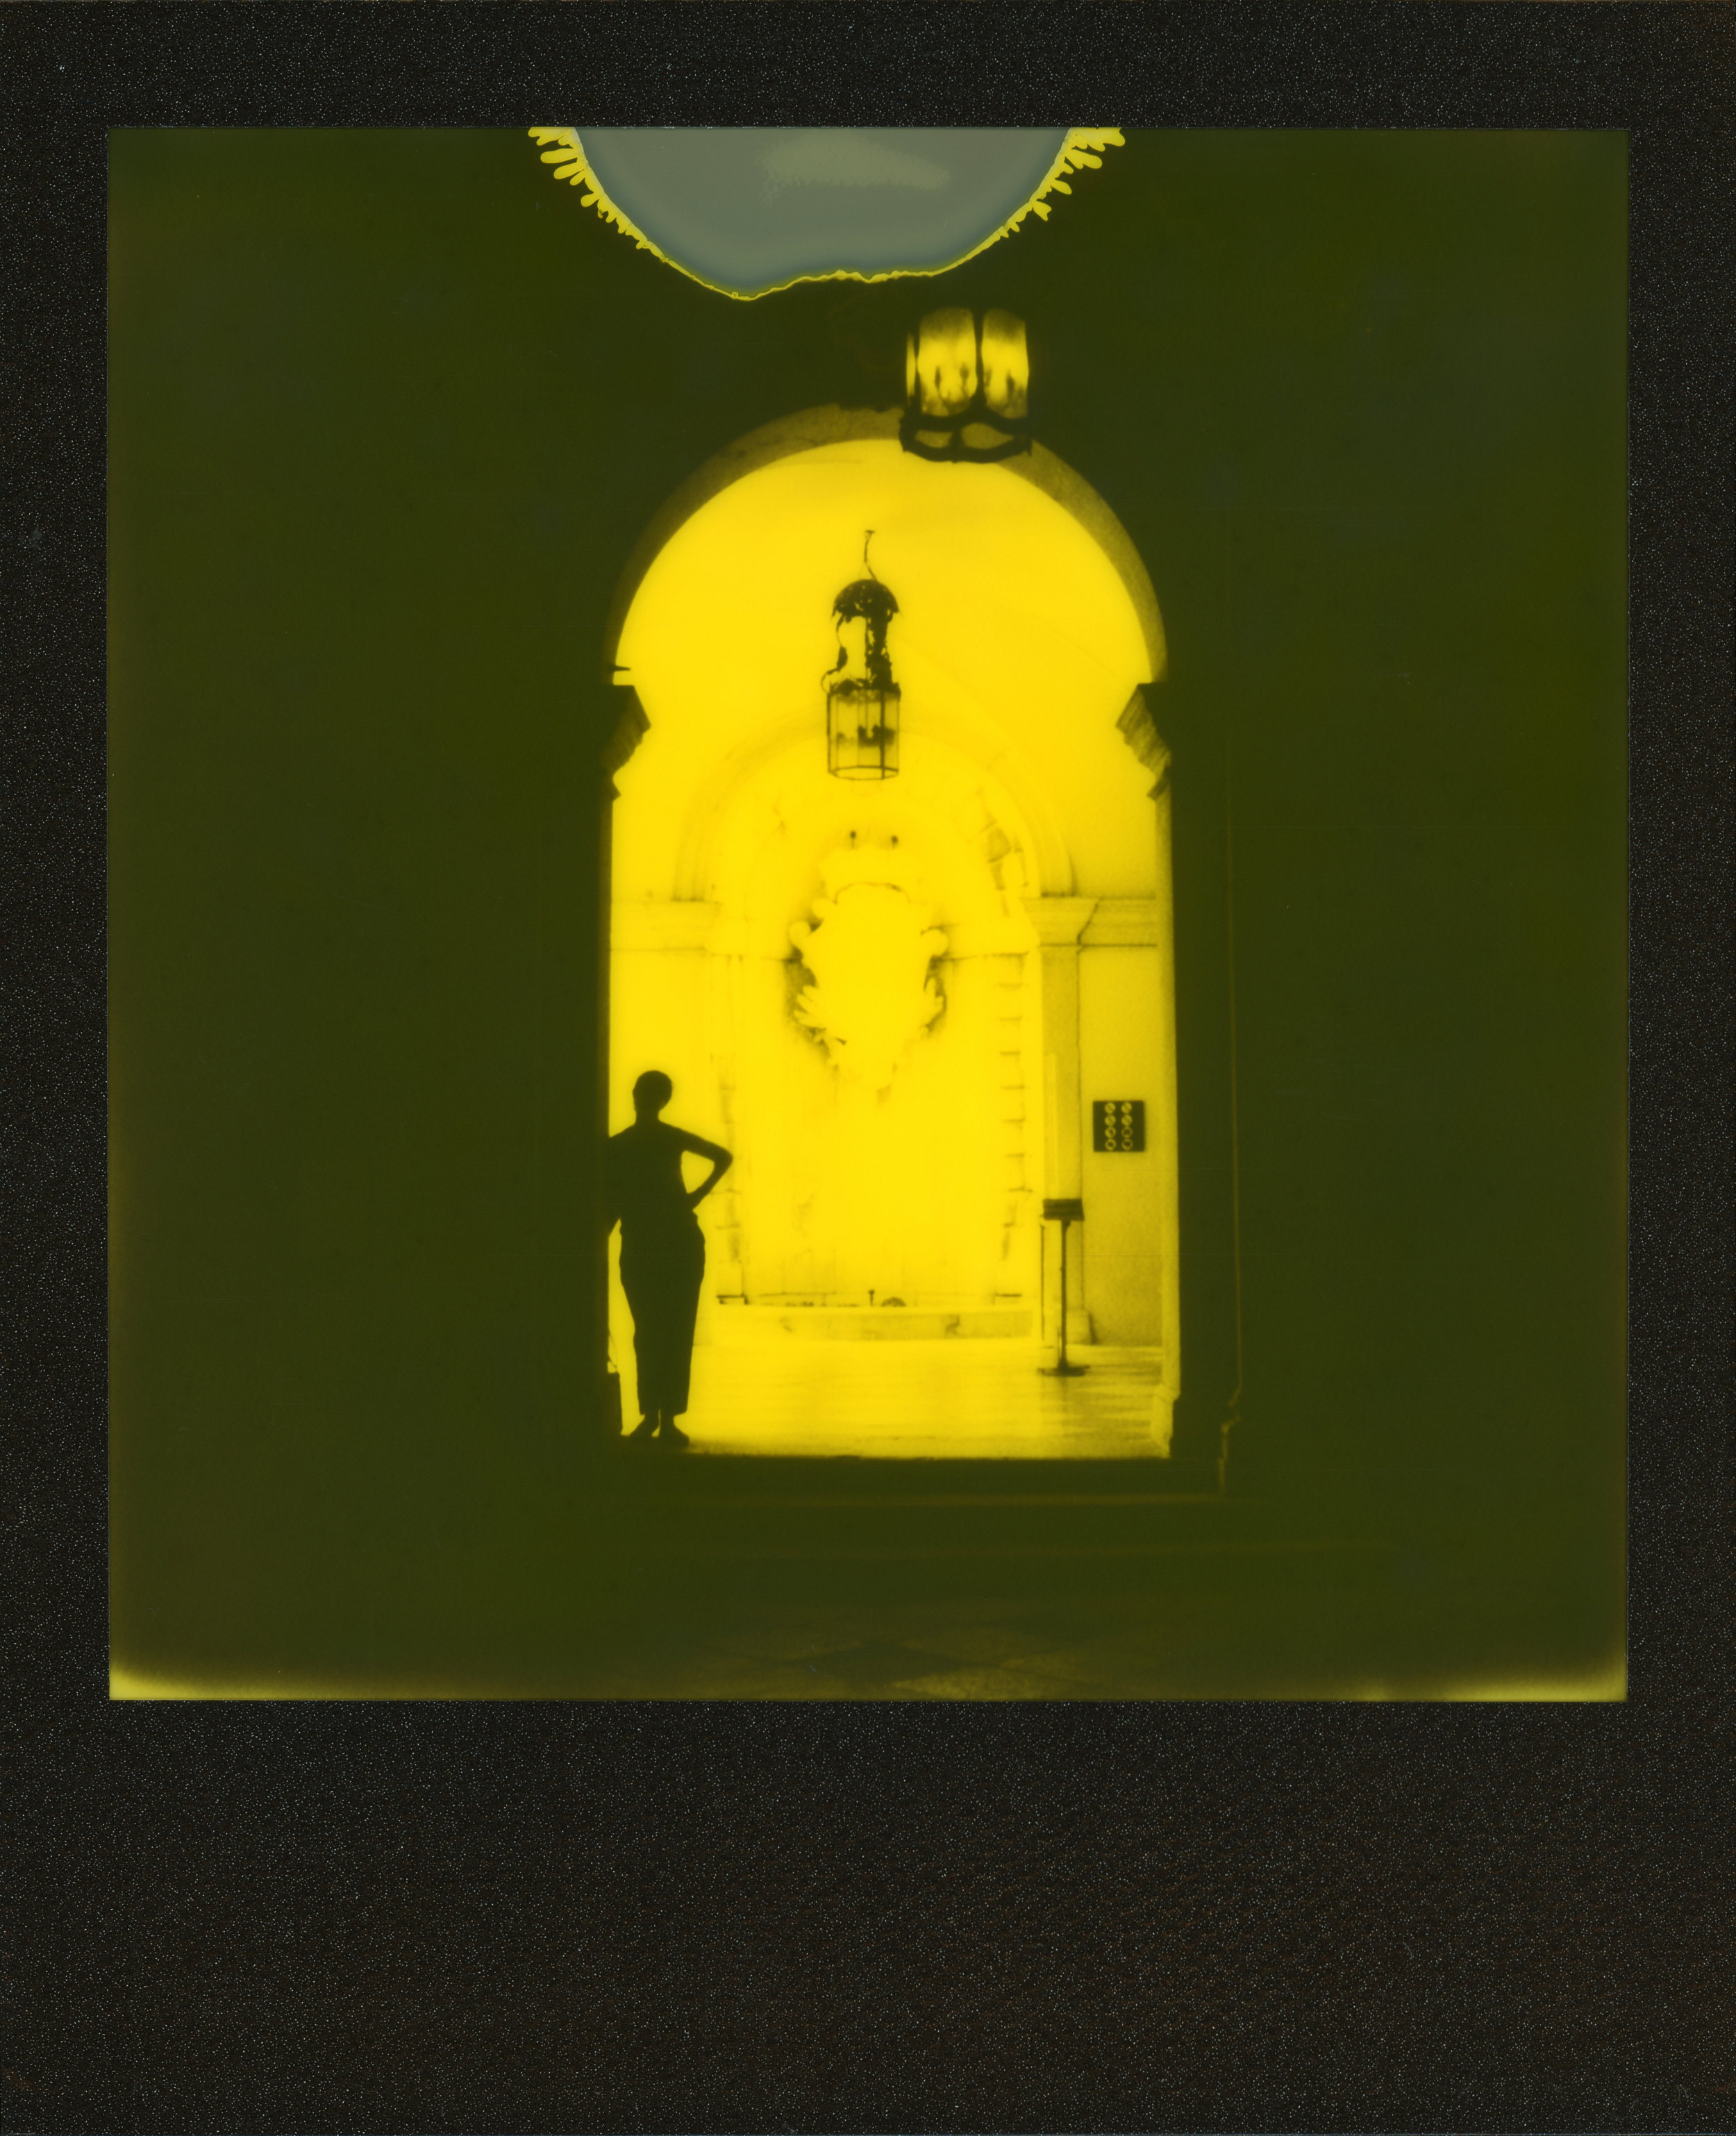 At Ca' Rezzonico | Polaroid SLR680 | Impossible Project Yellow Duochrome 600 | Marian Rainer-Harbach